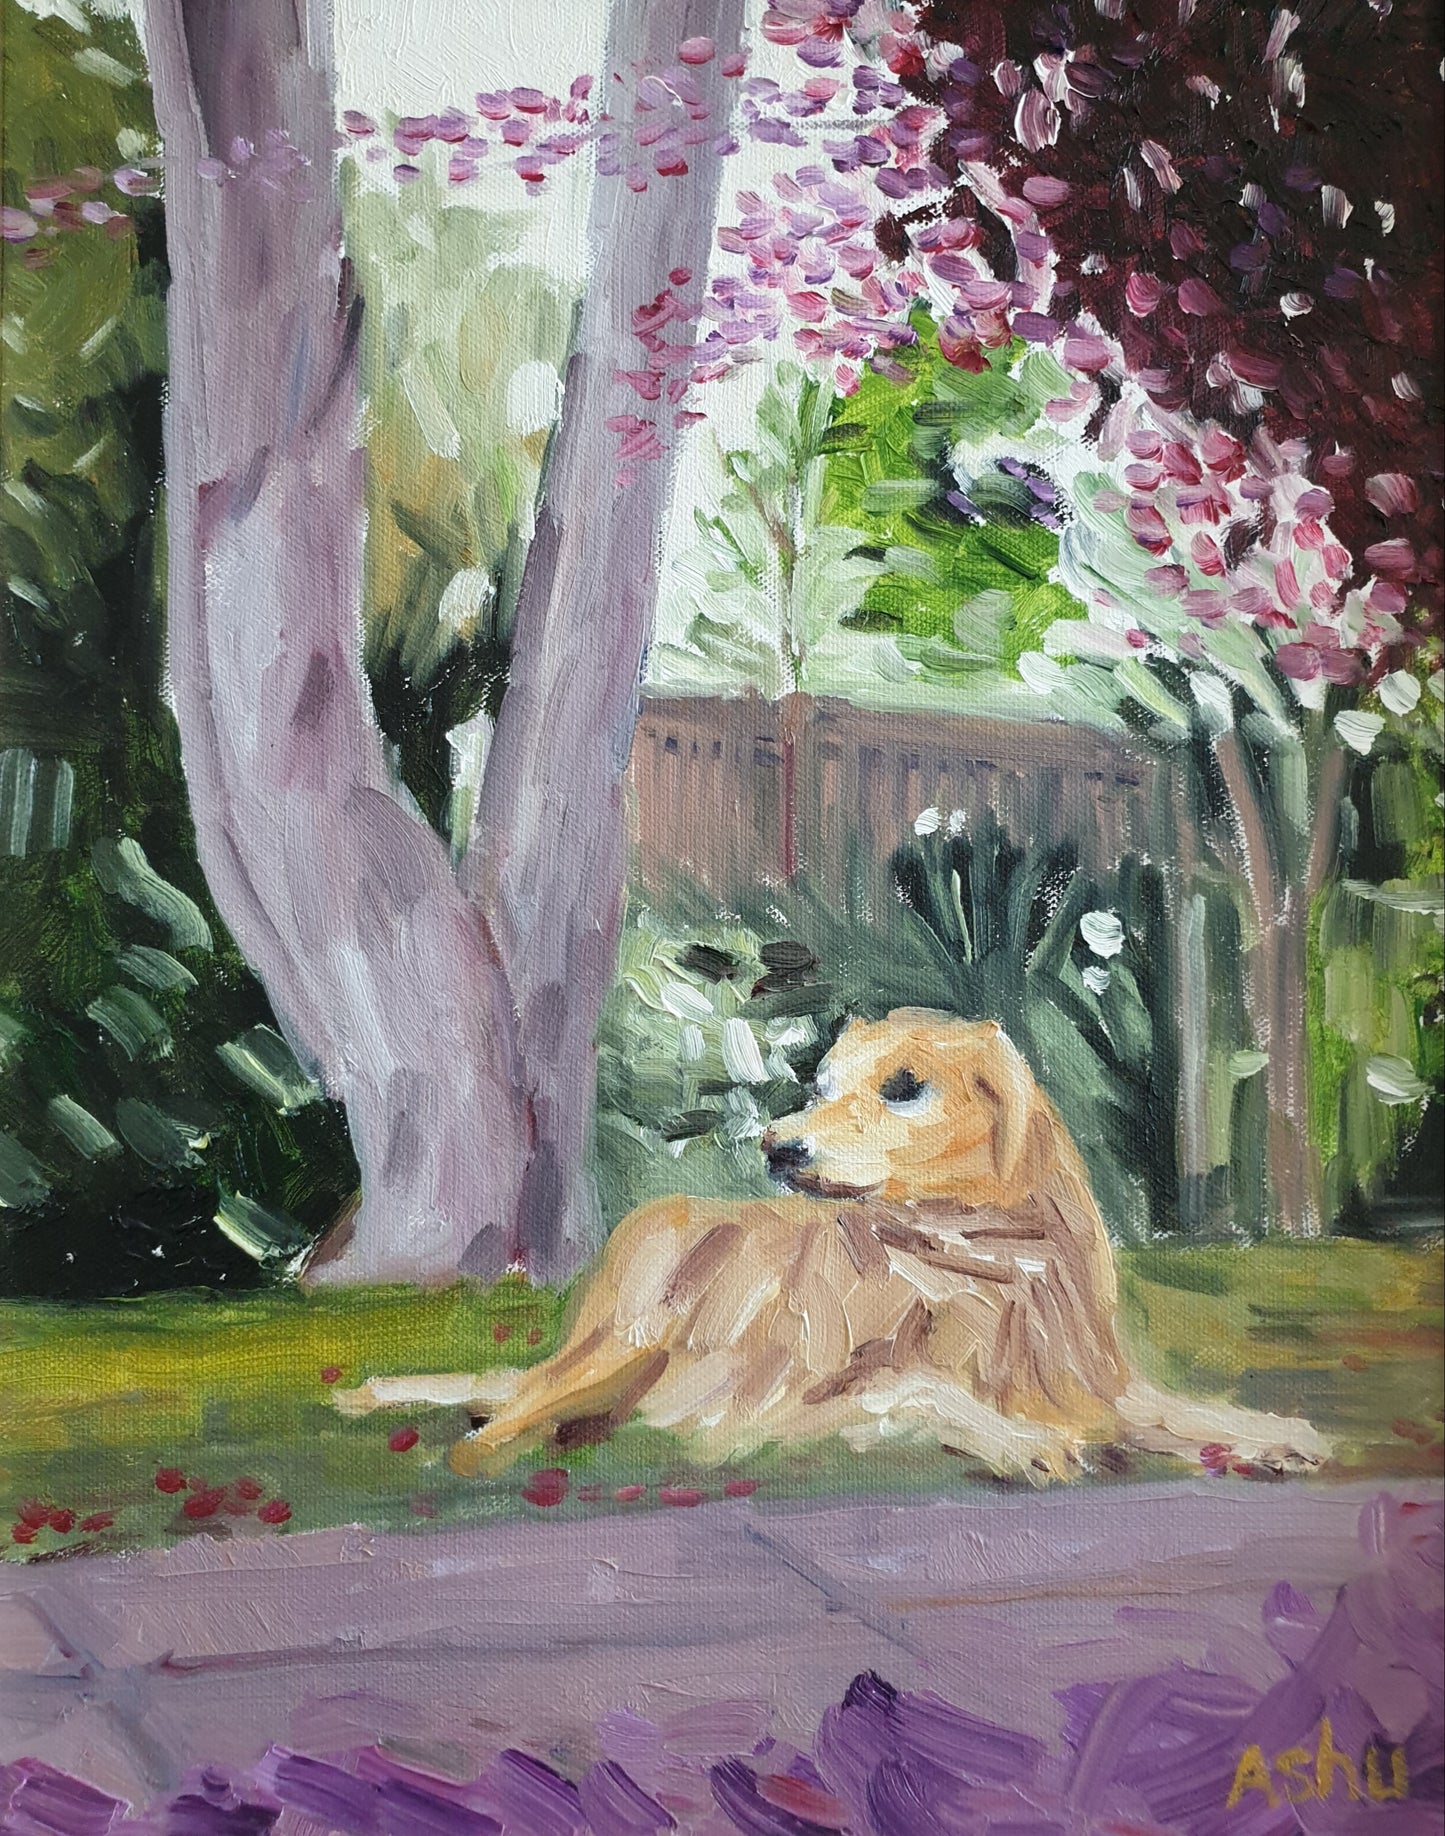 #Dog under the #Tree (commission) - Ashu's Art